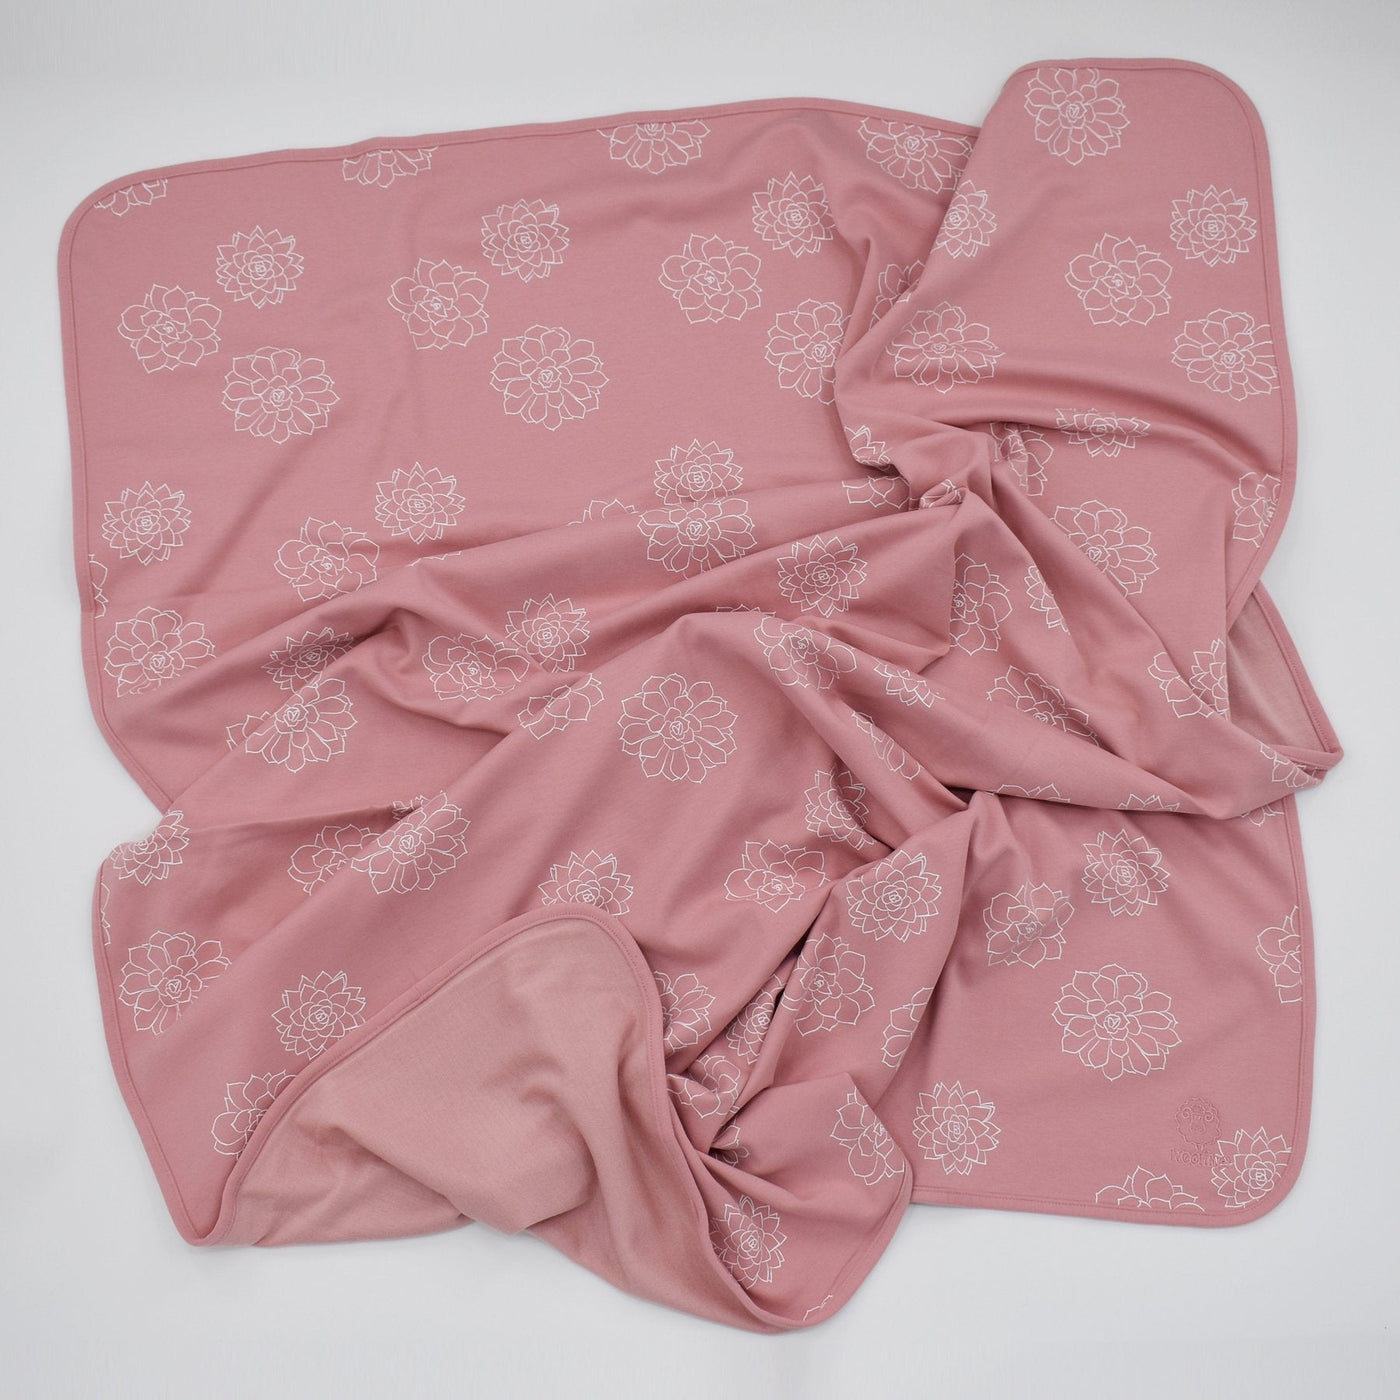 4 Season® Stroller Merino Wool & Organic Cotton Baby Blanket, 40" x 31.5", Succulent